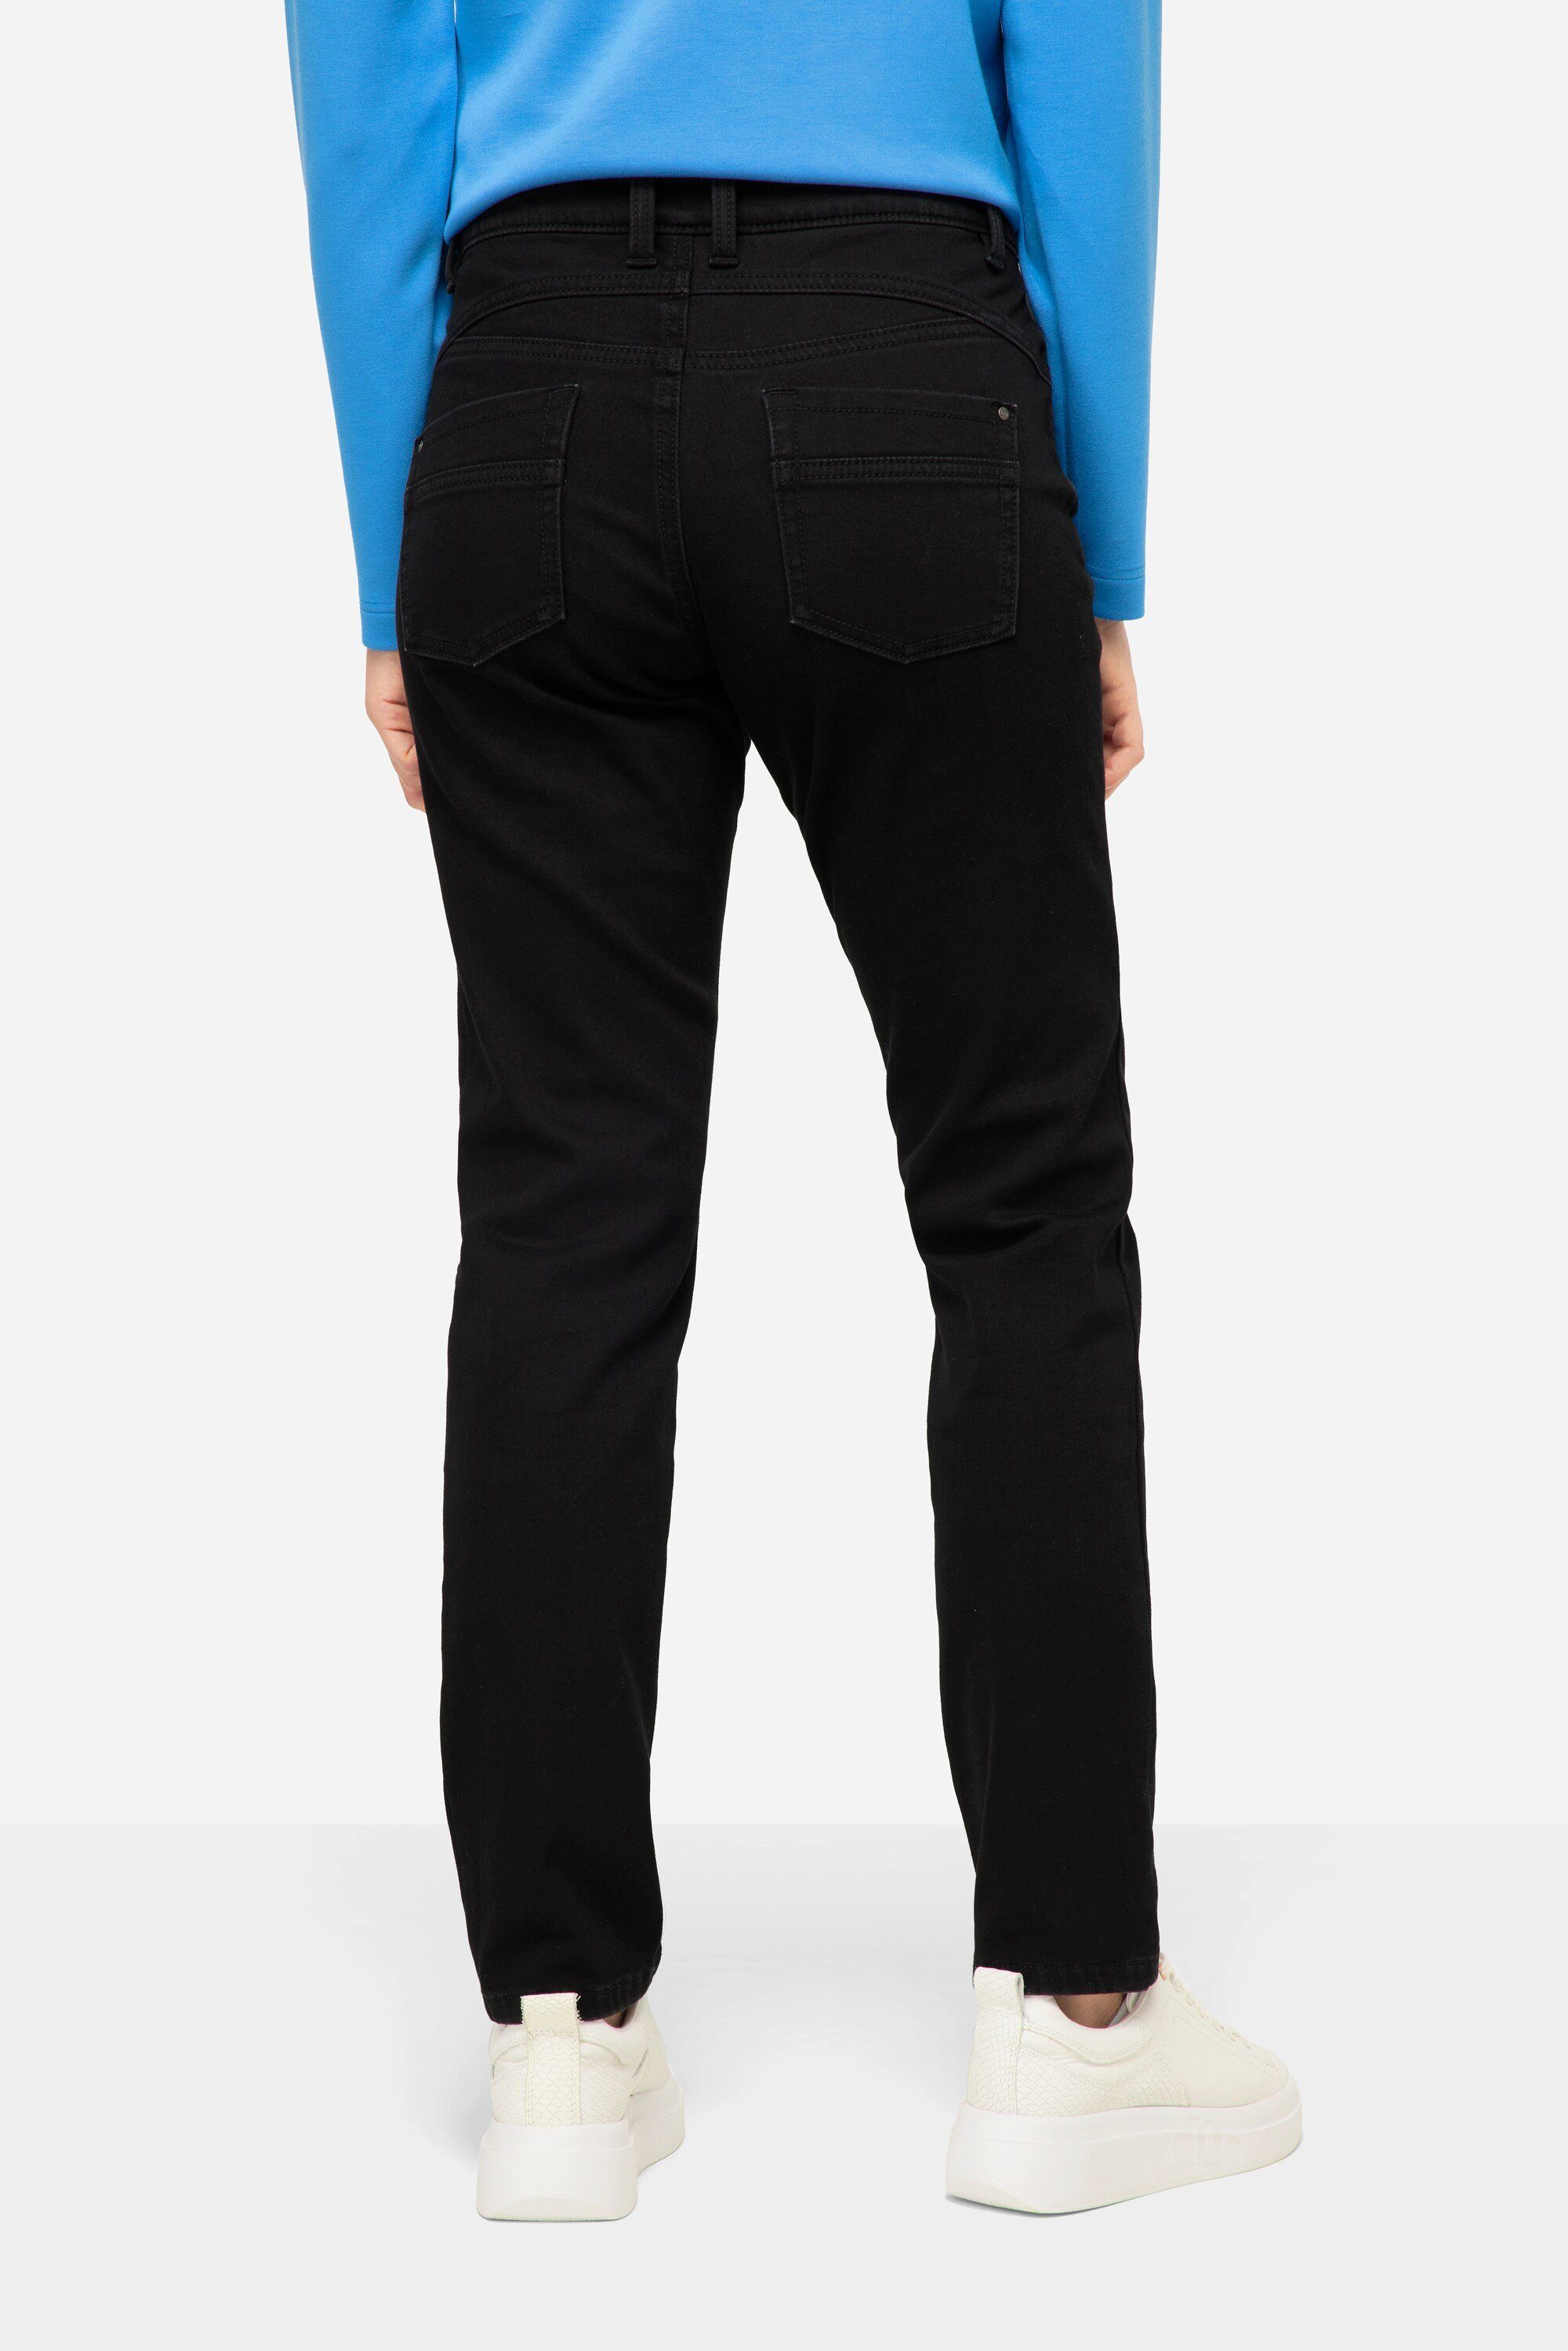 Laurasøn 5-Pocket-Jeans schwarz Fit 5-Pocket Straight Winter-Jeans